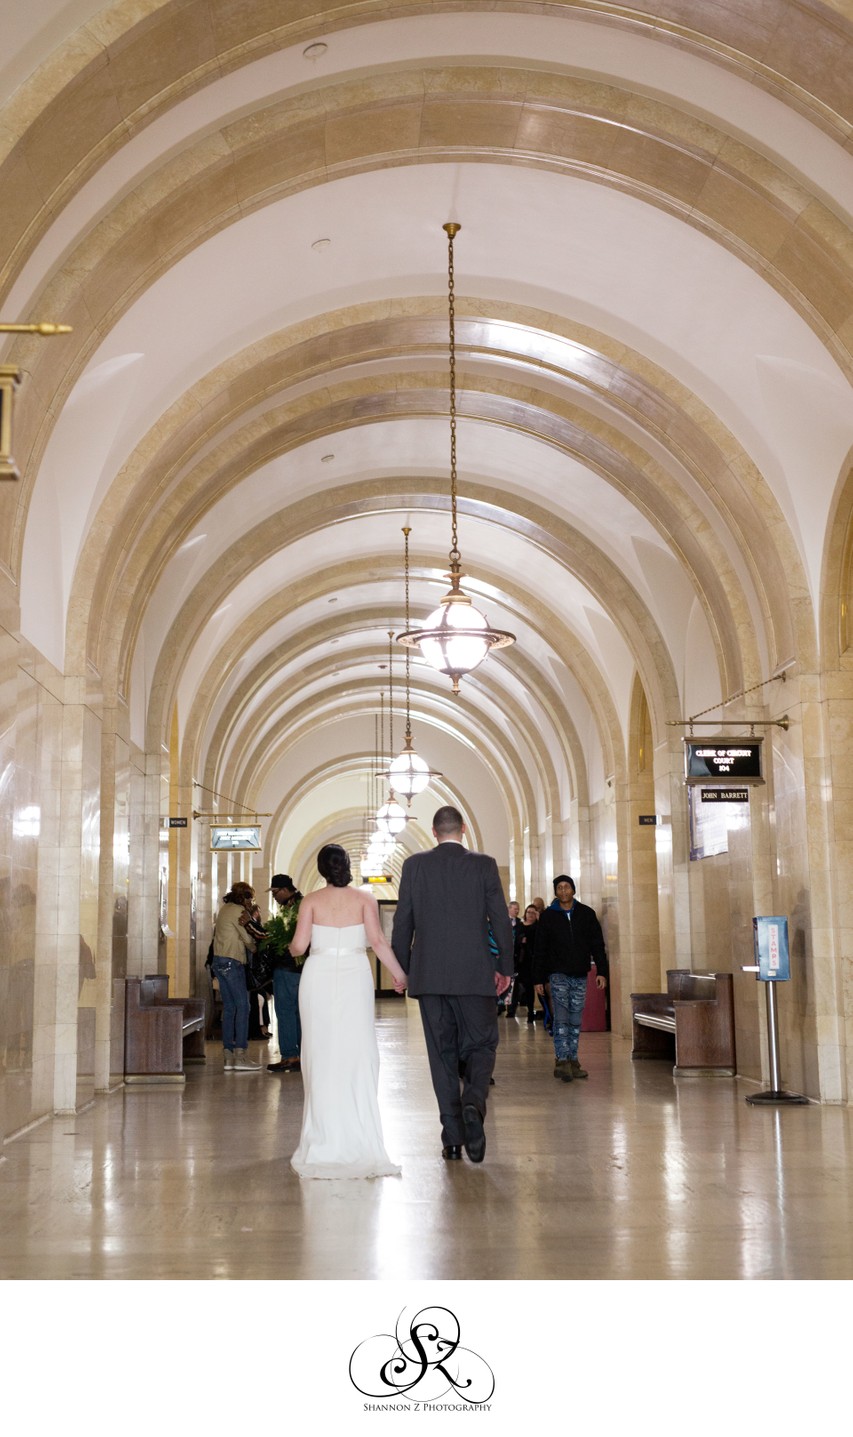 Milwaukee Courthouse Wedding: The Couple